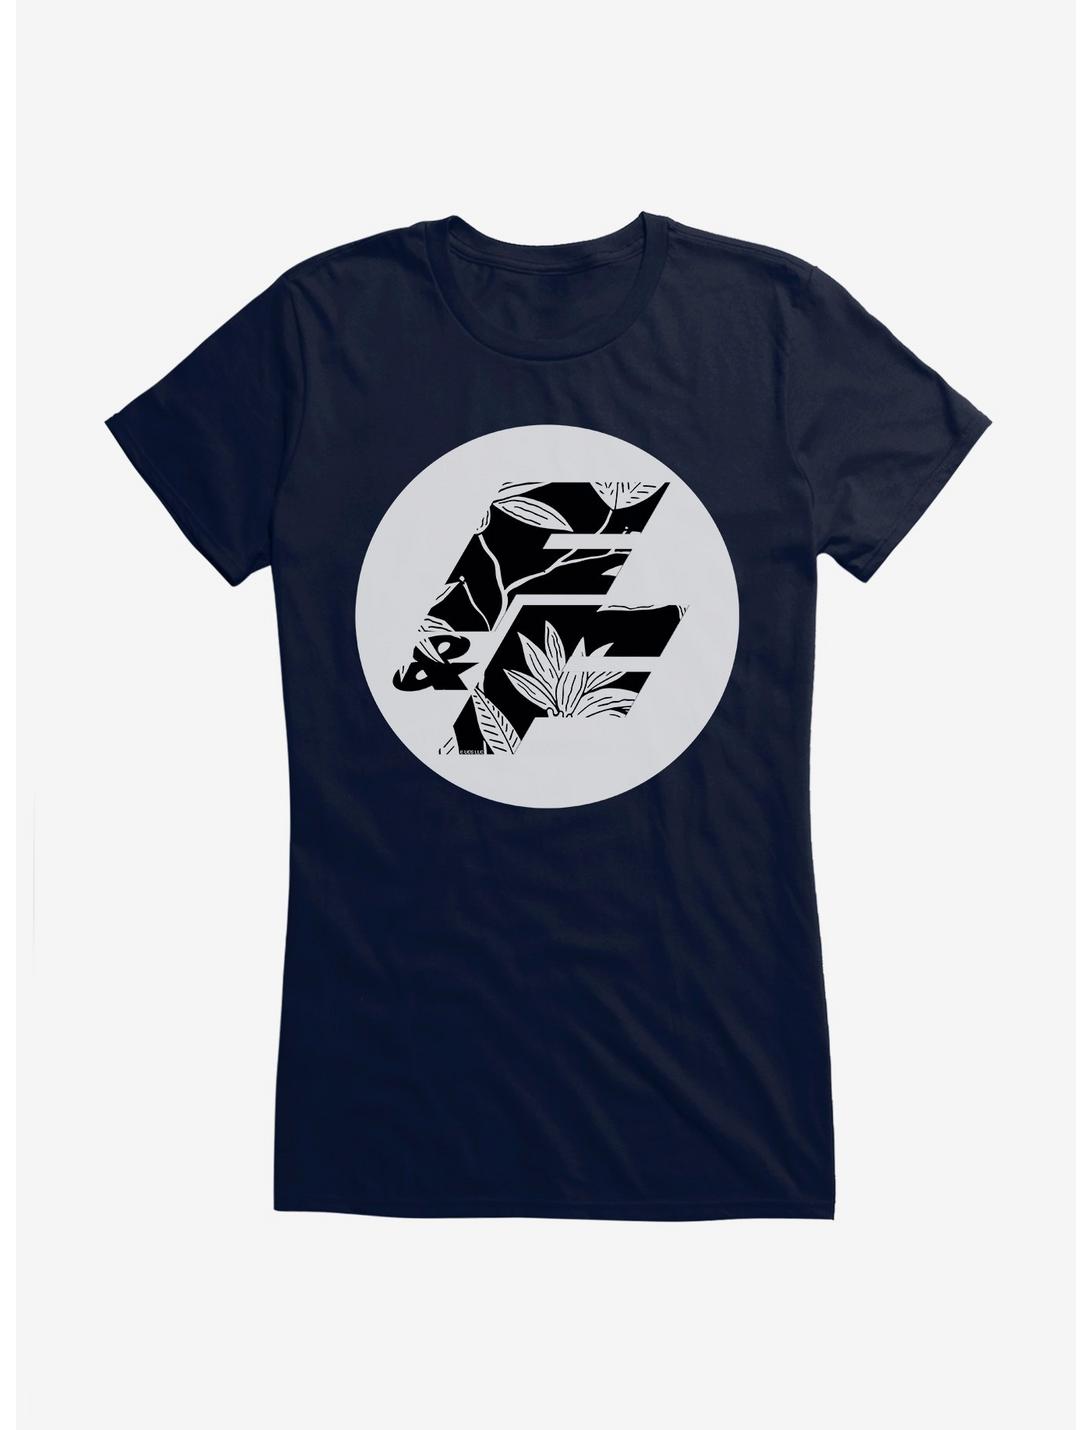 Fast & Furious Grayscale Tropic Logo Girls T-Shirt, , hi-res